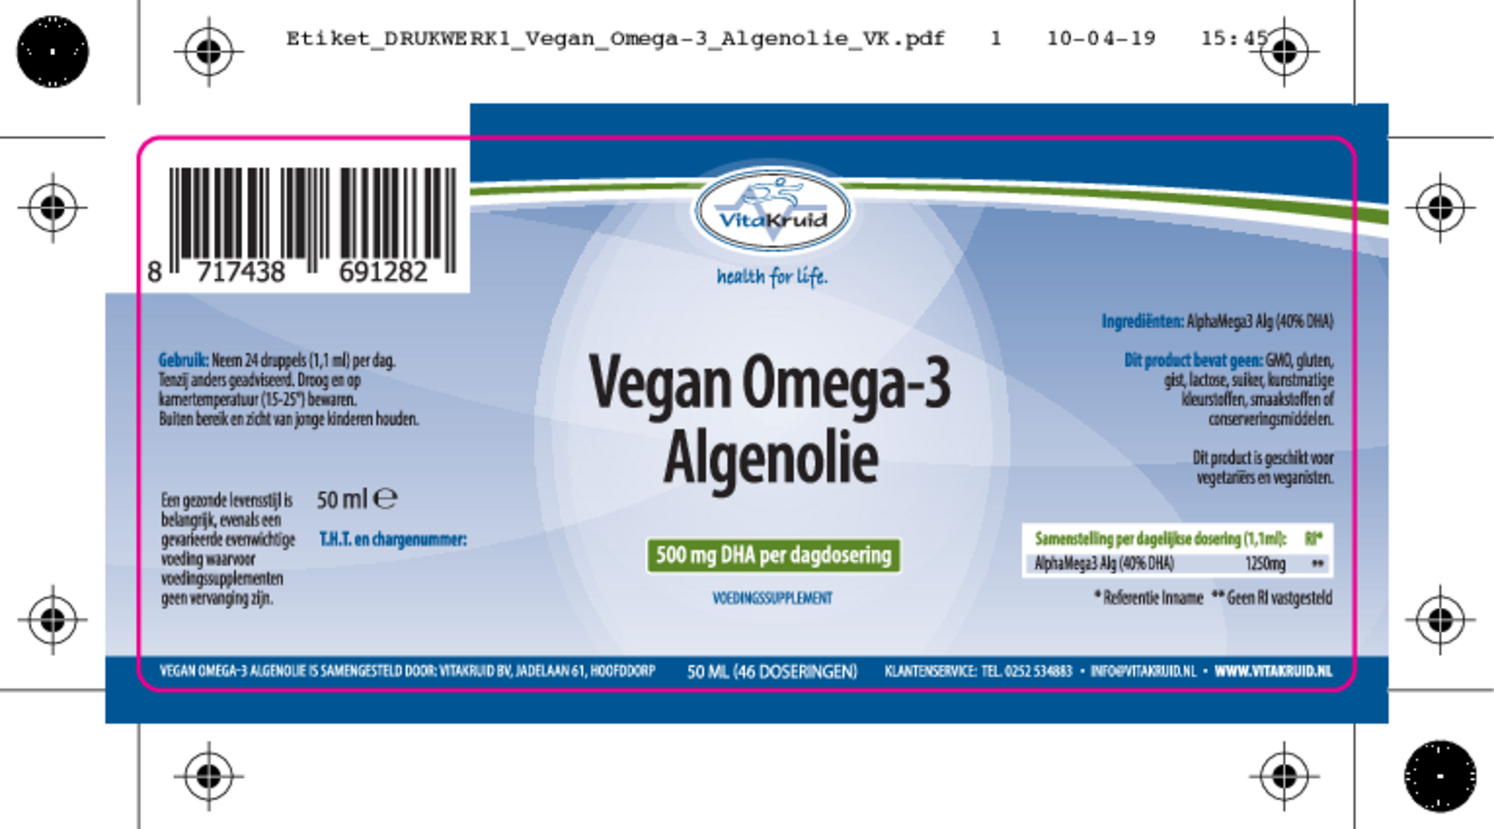 Omega-3 Algenolie afbeelding van document #1, etiket